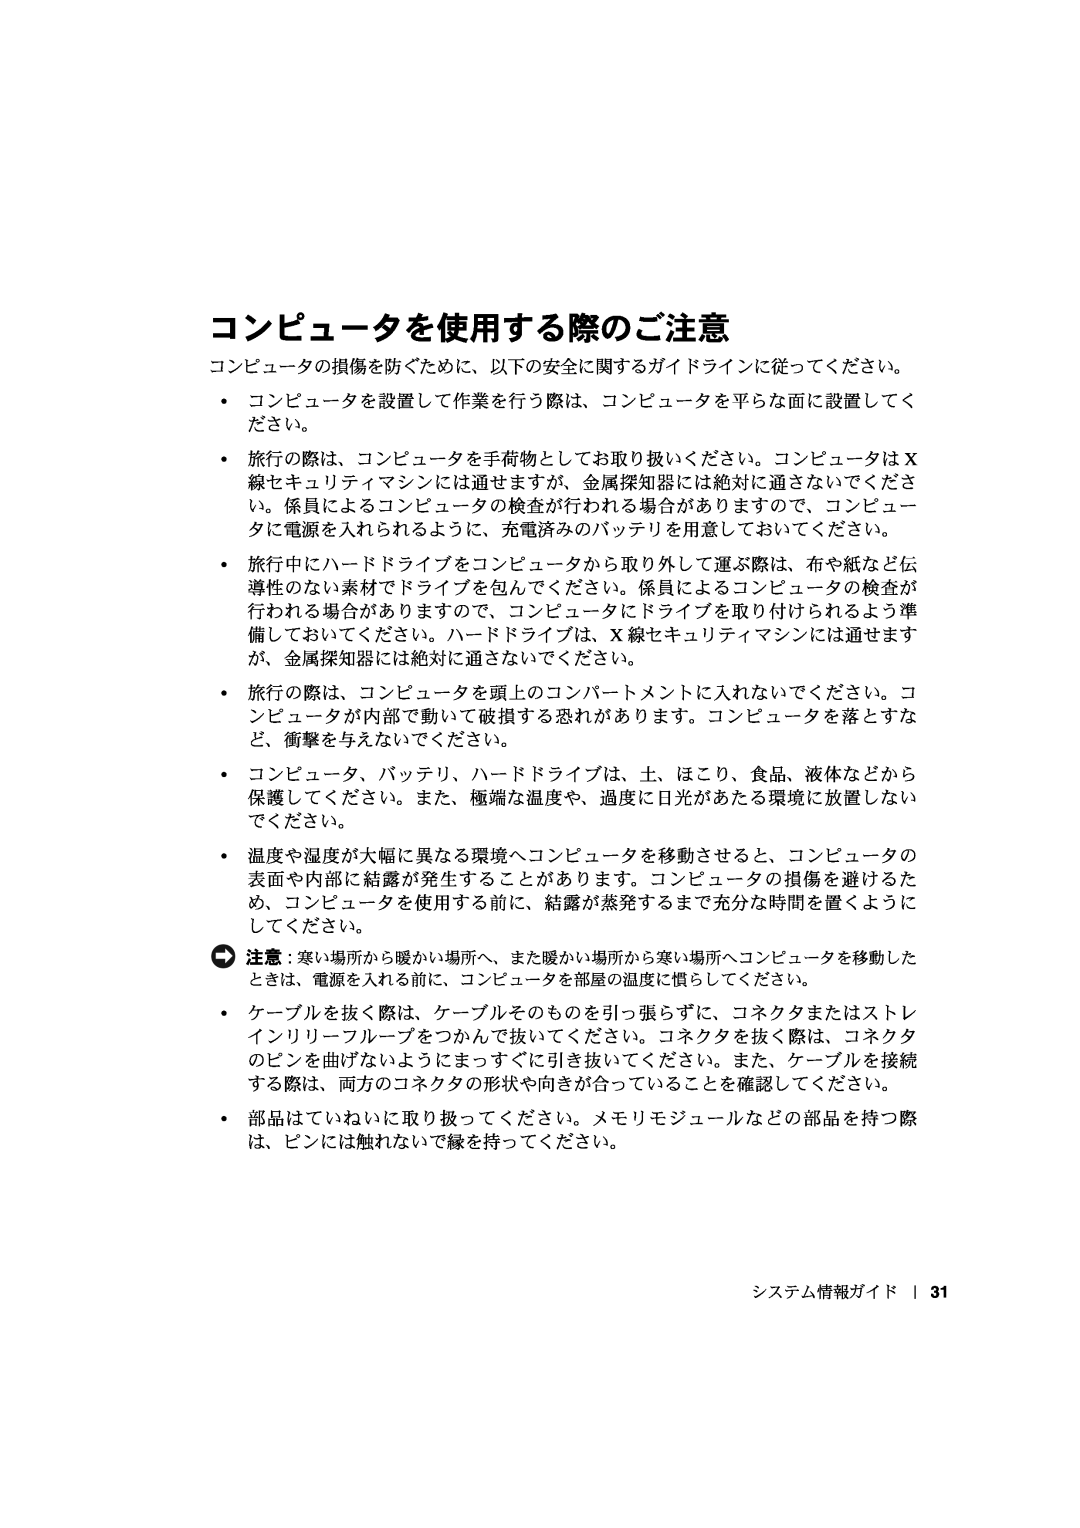 Dell PP03S manual 